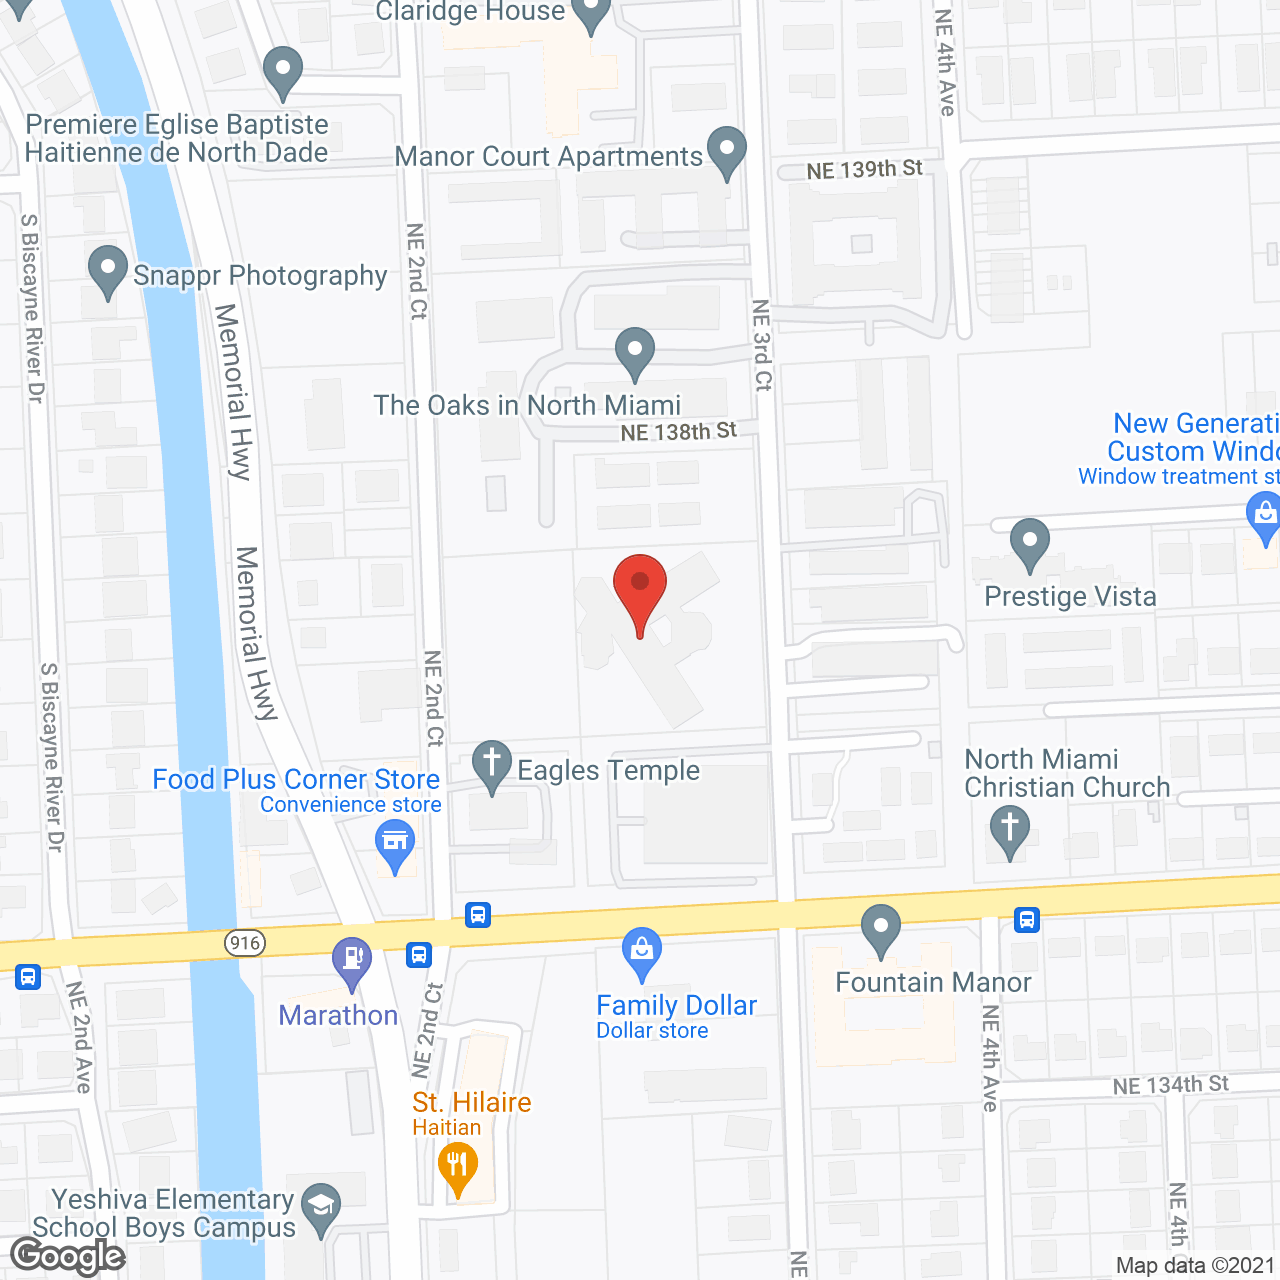 Pinecrest Rehabilitation Center in google map